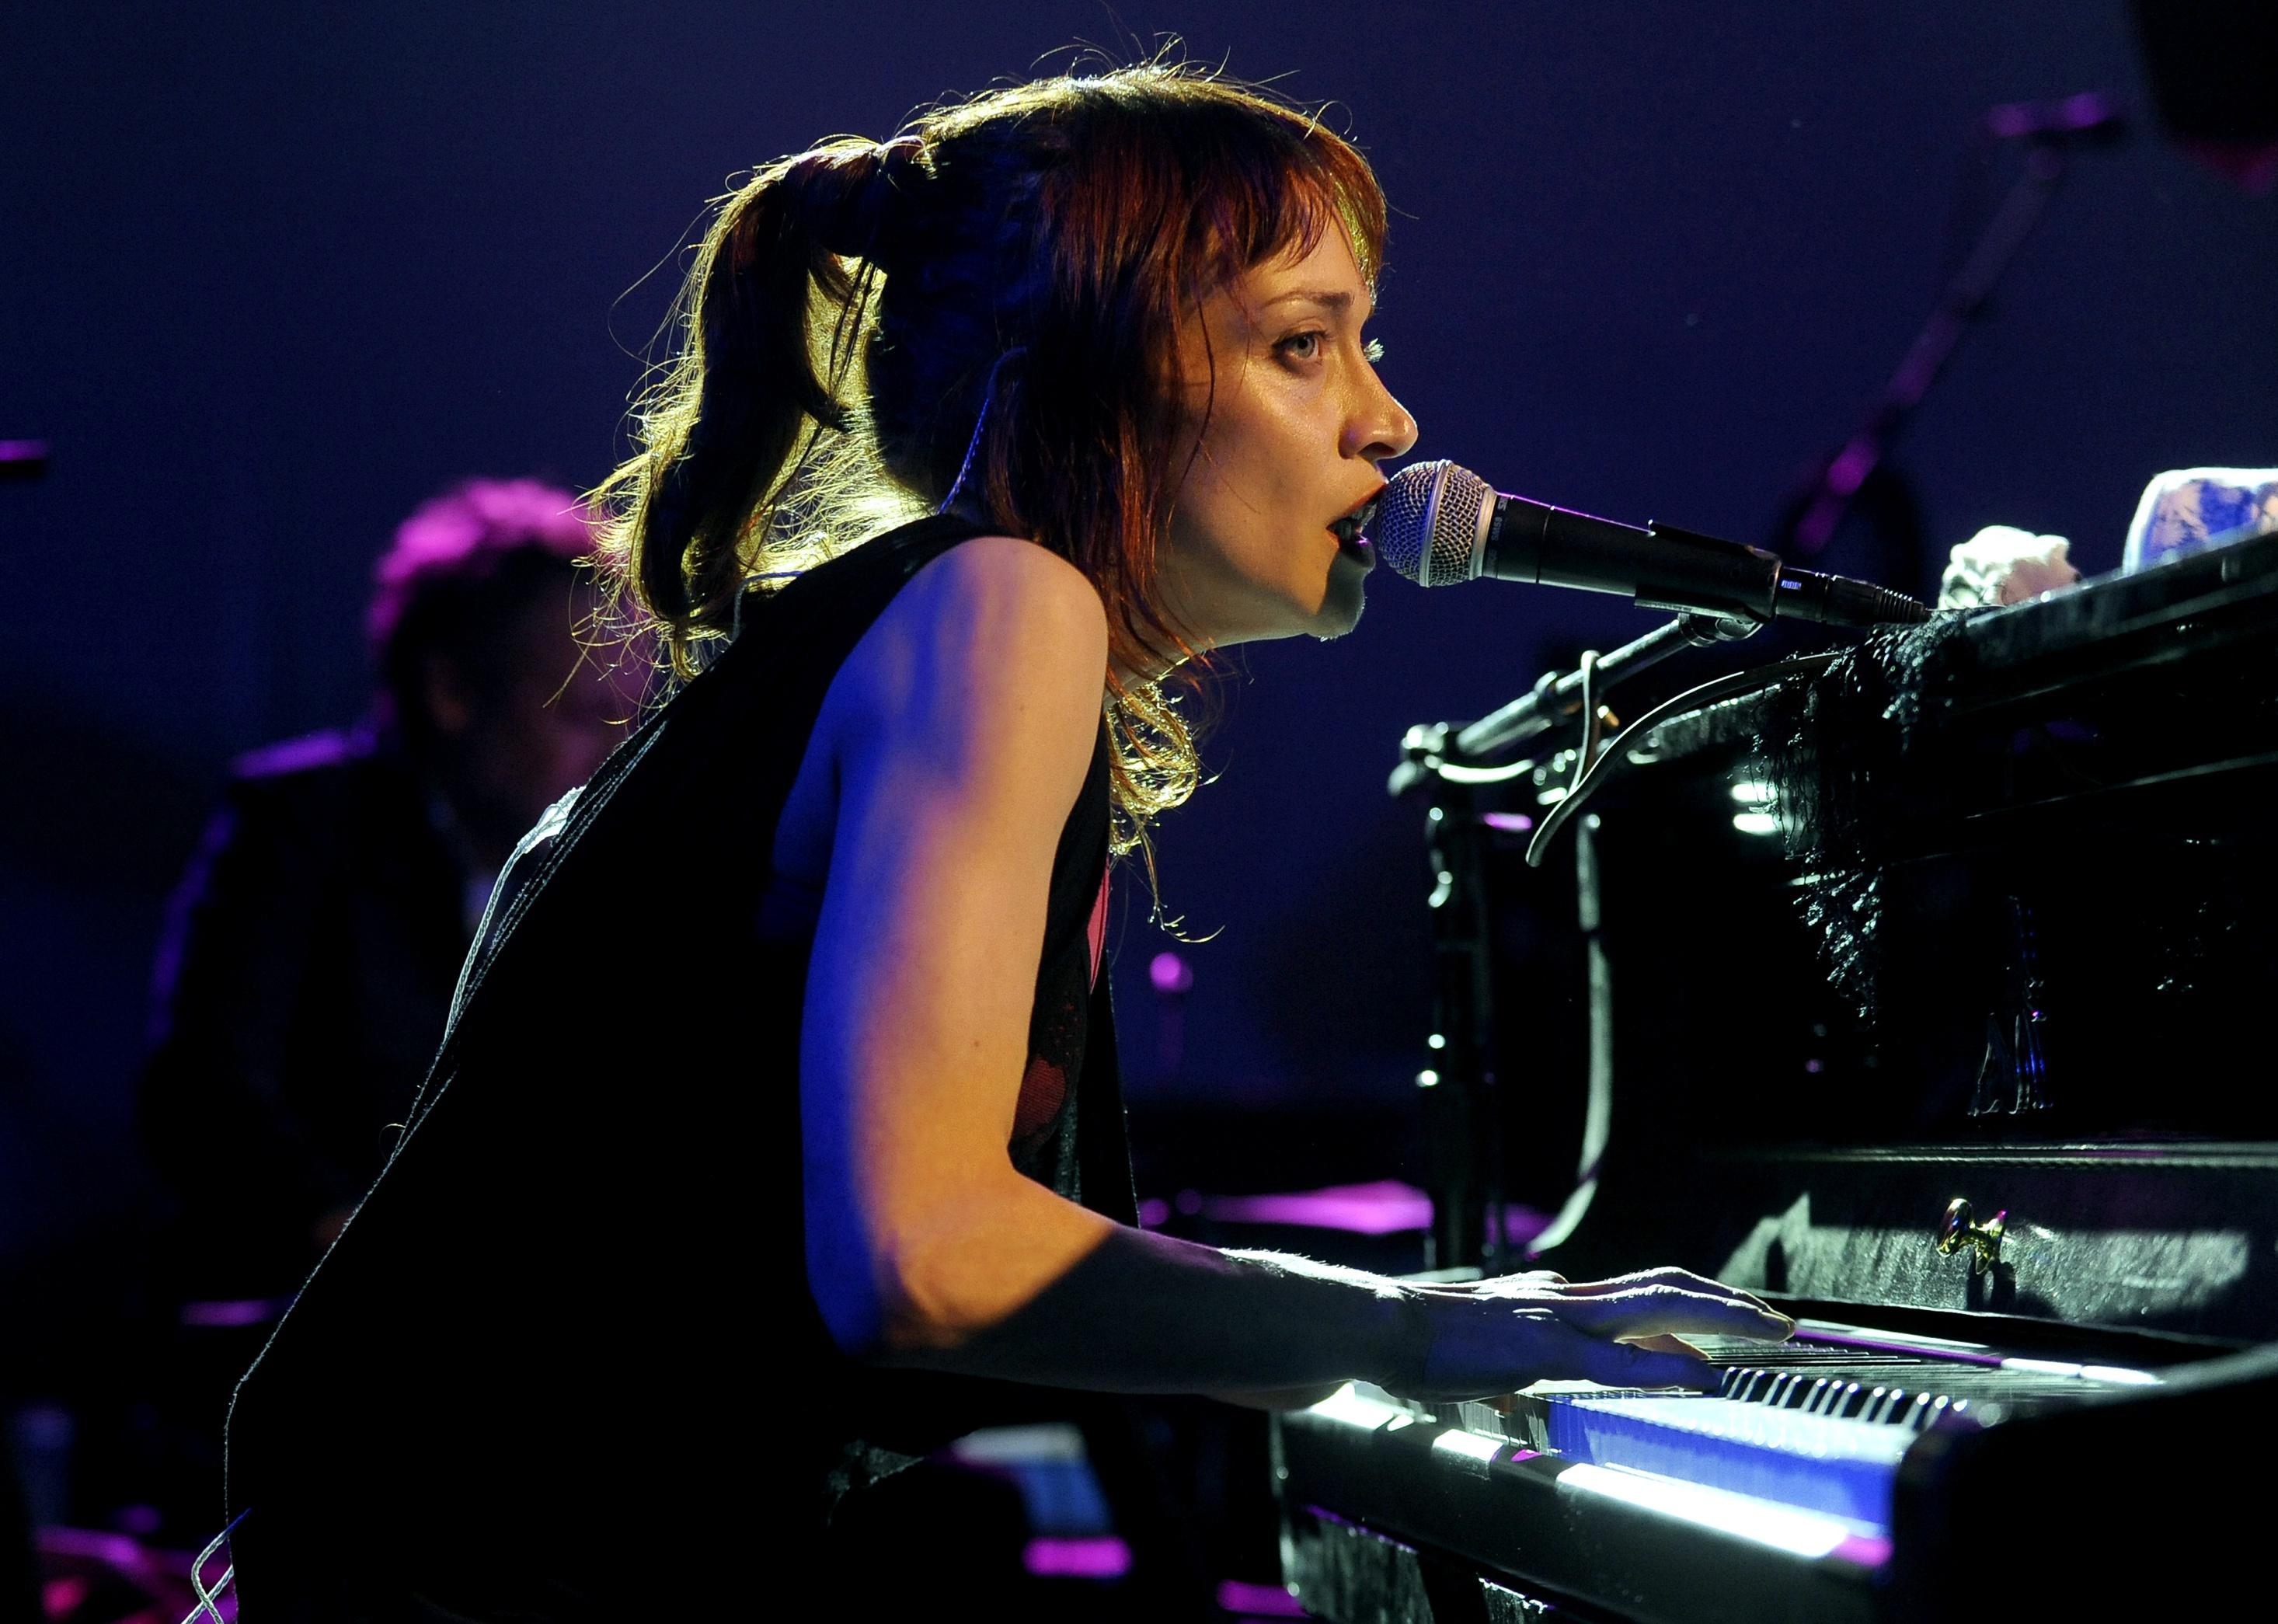 Fiona Apple plays the piano.